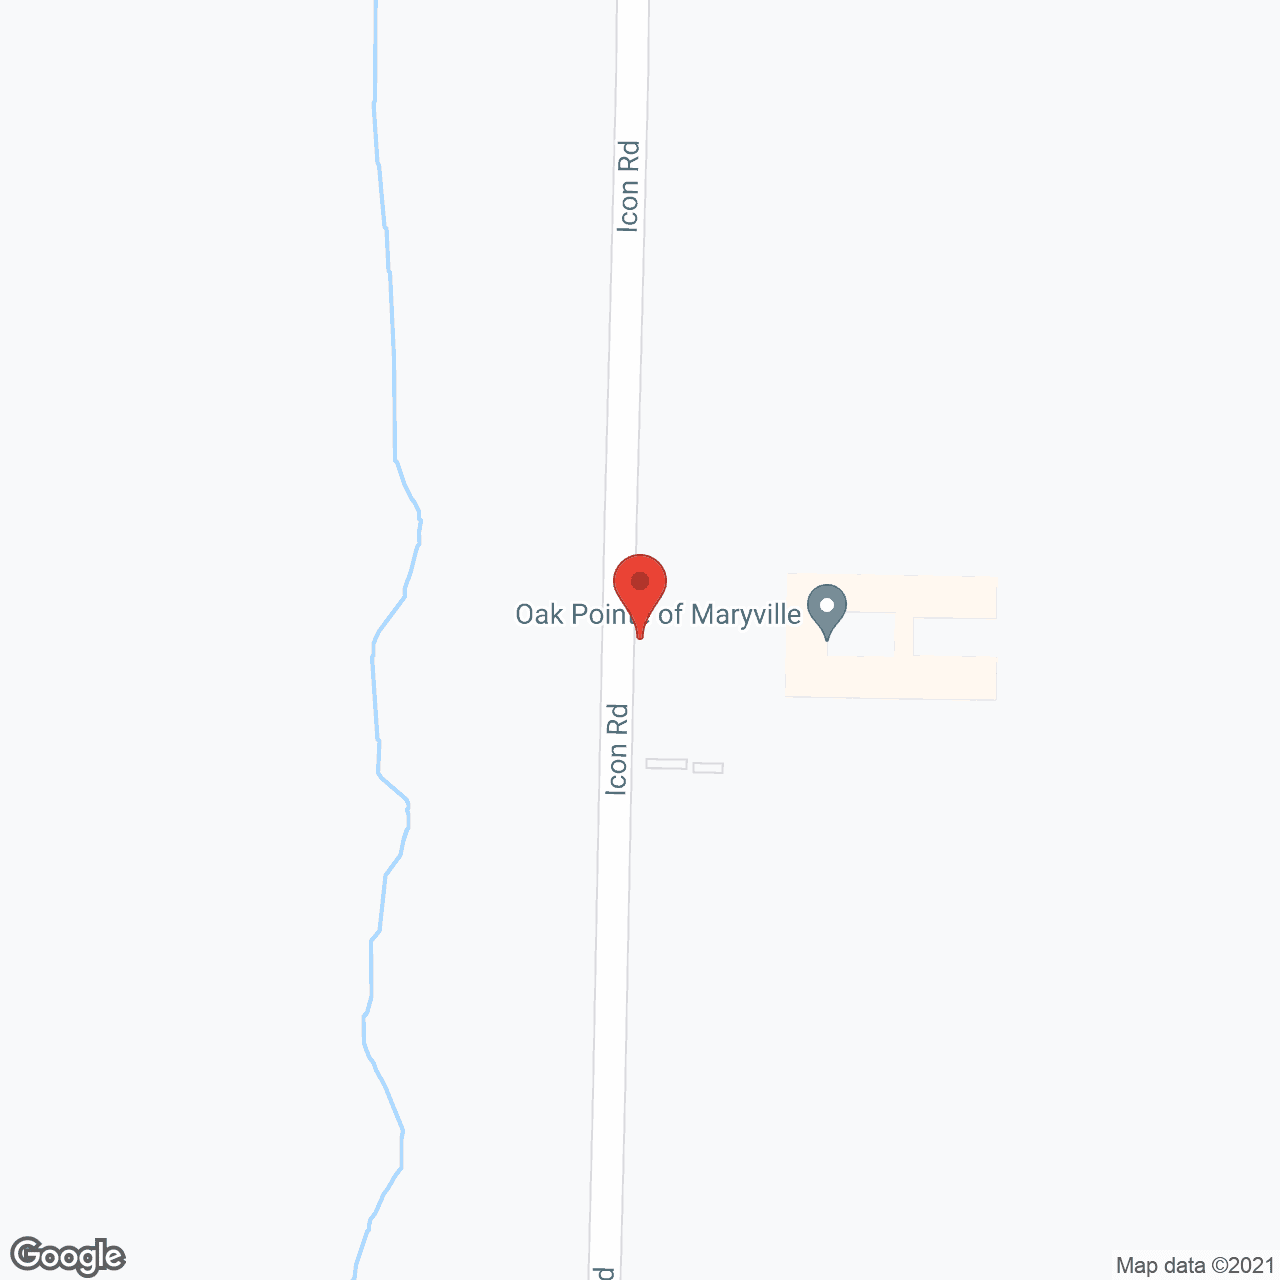 Oak Pointe of Maryville in google map